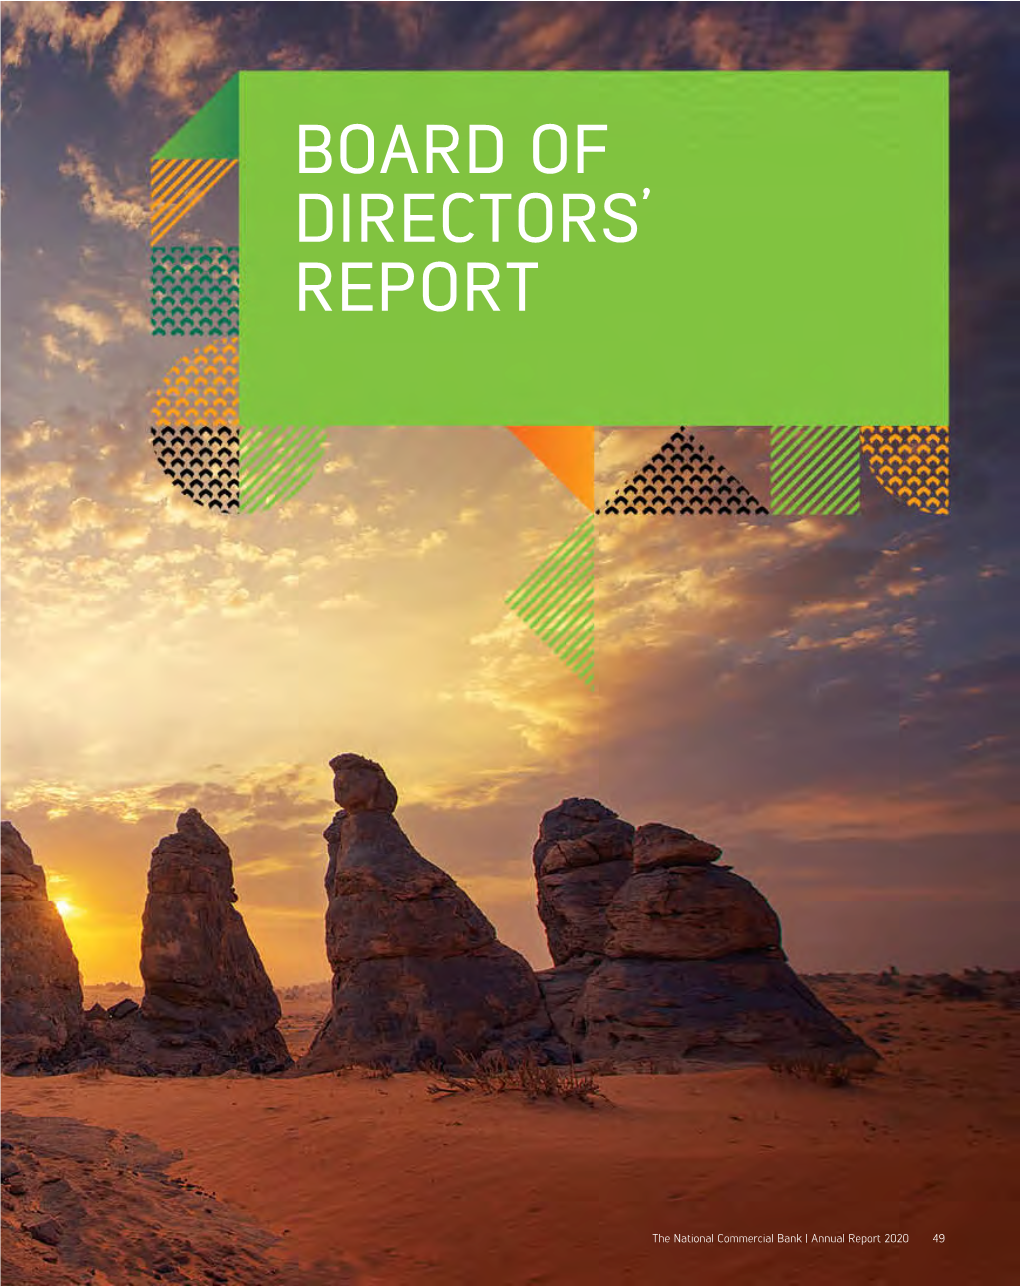 Board of Directors' Report